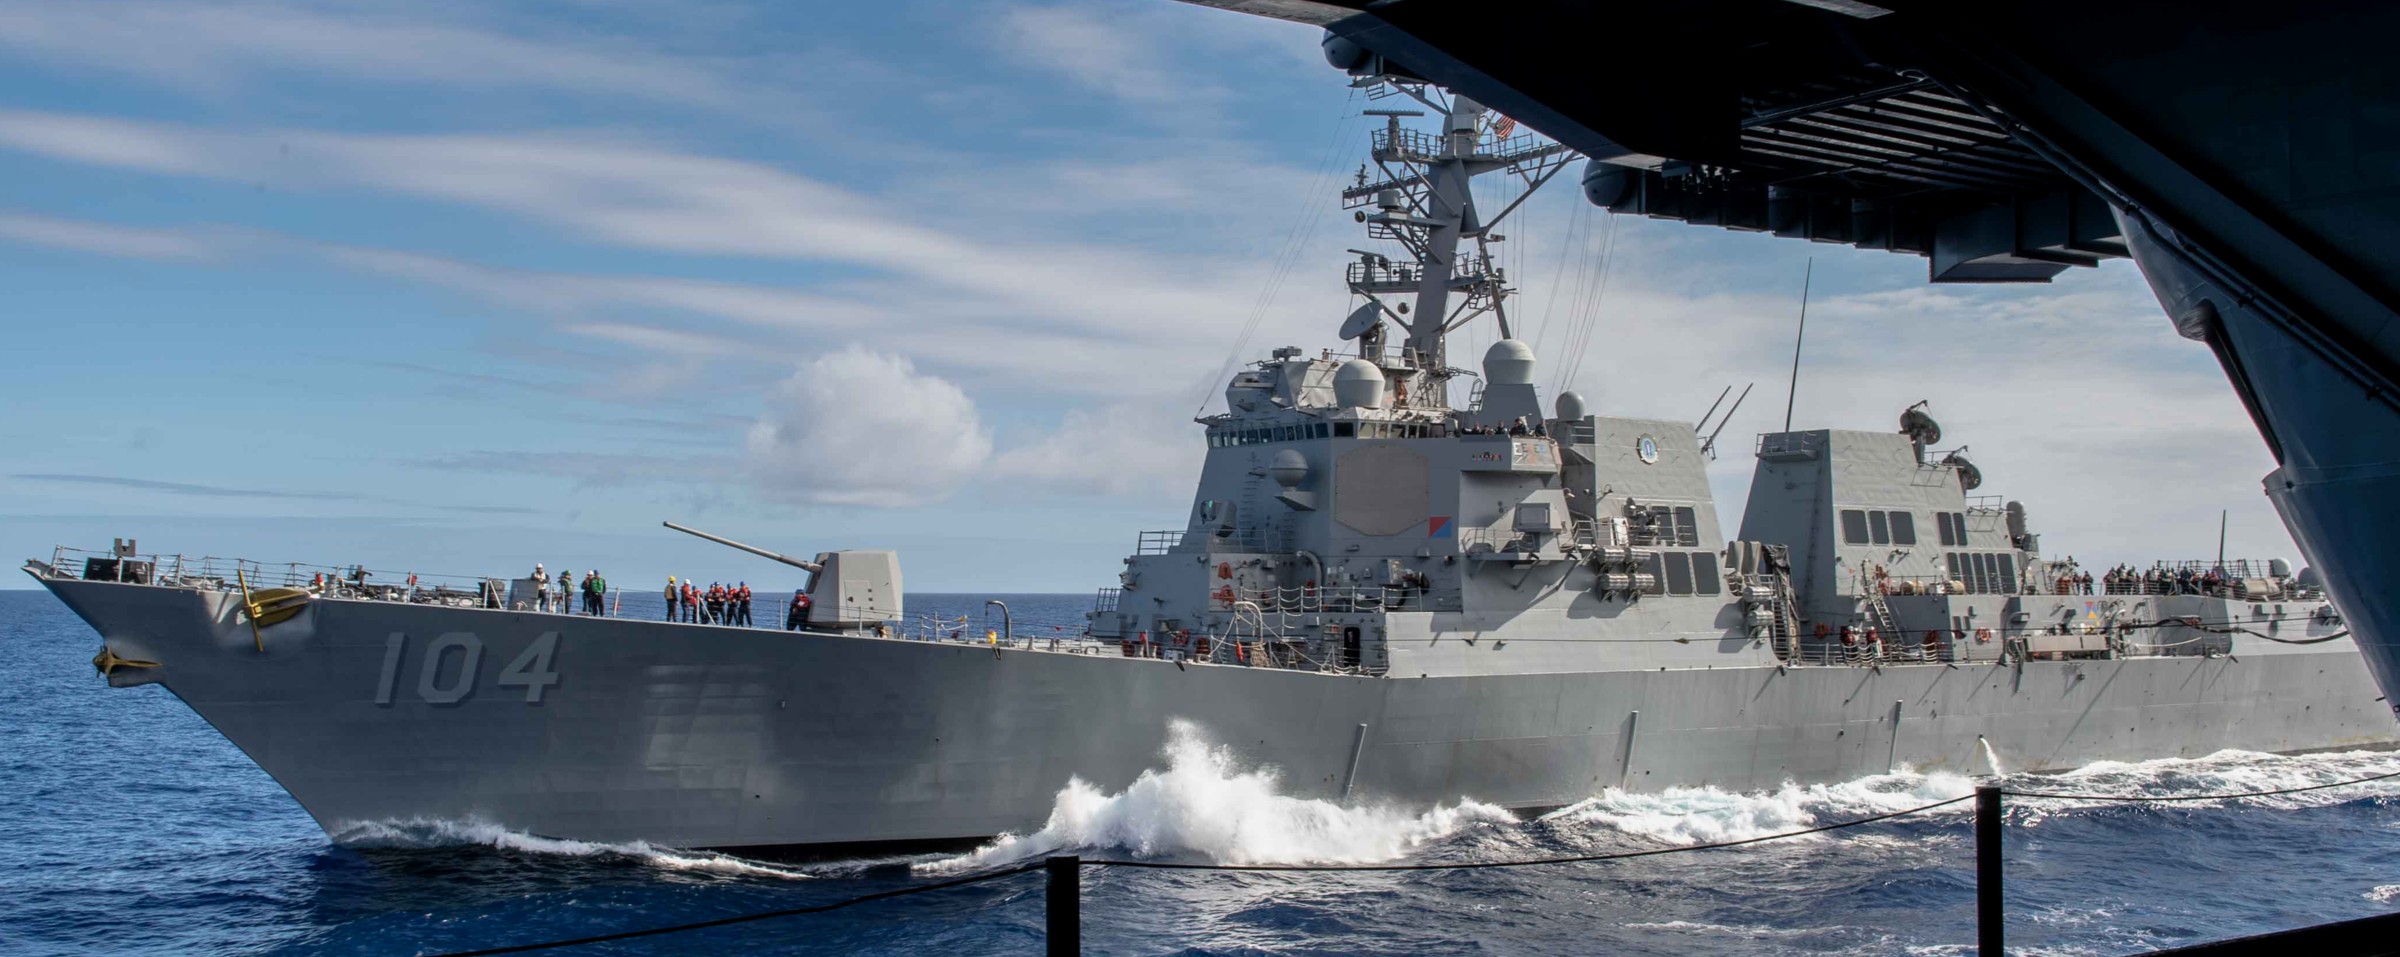 ddg-104 uss sterett arleigh burke class guided missile destroyer aegis us navy pacific ocean 84